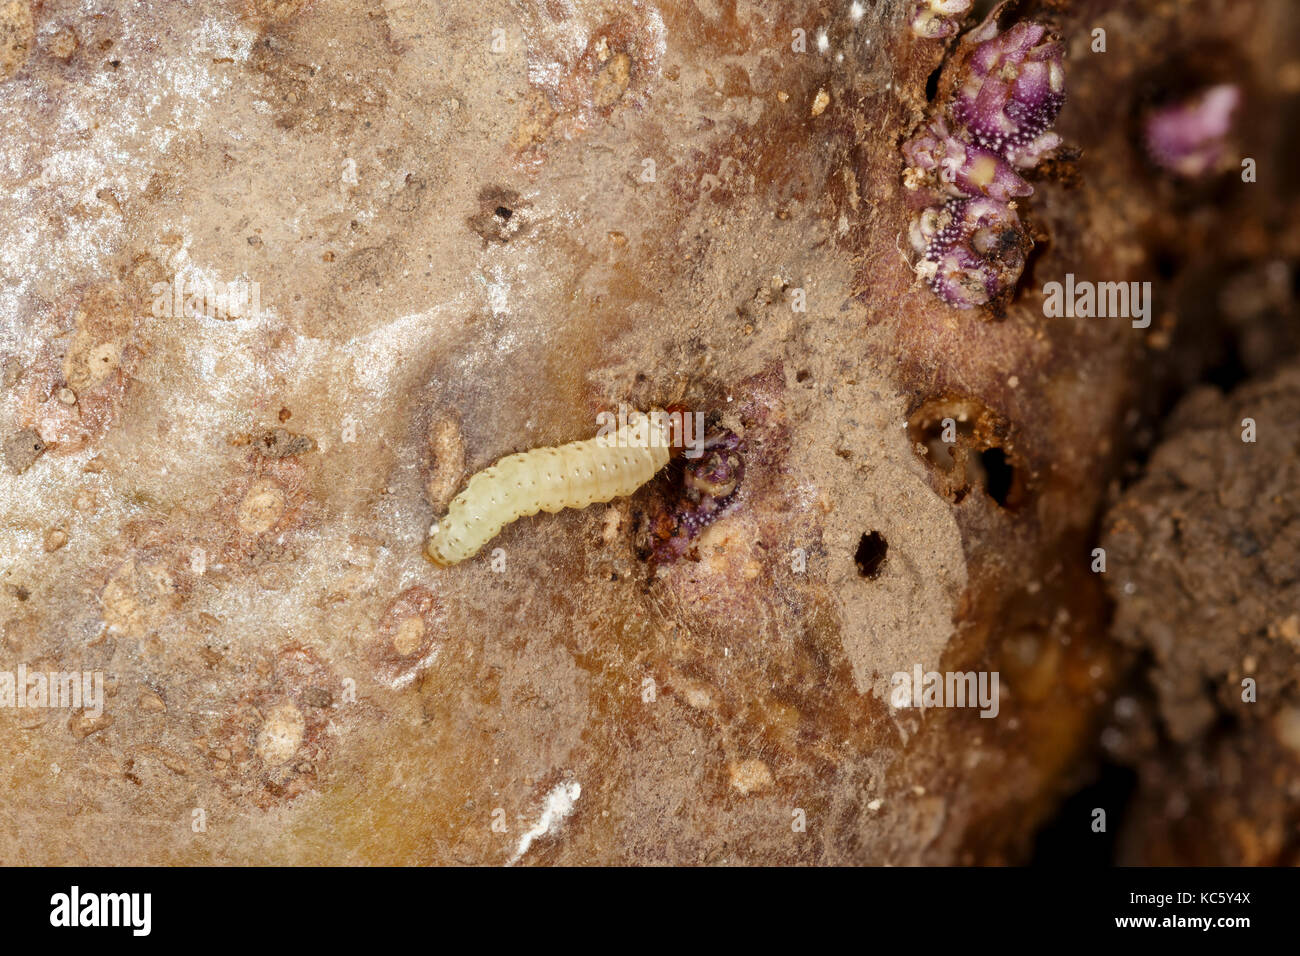 Larvae of the Central American potato tuberworm (Guatemalan potato moth) Tecia solanivora (Povolny) on a potato tuber Stock Photo